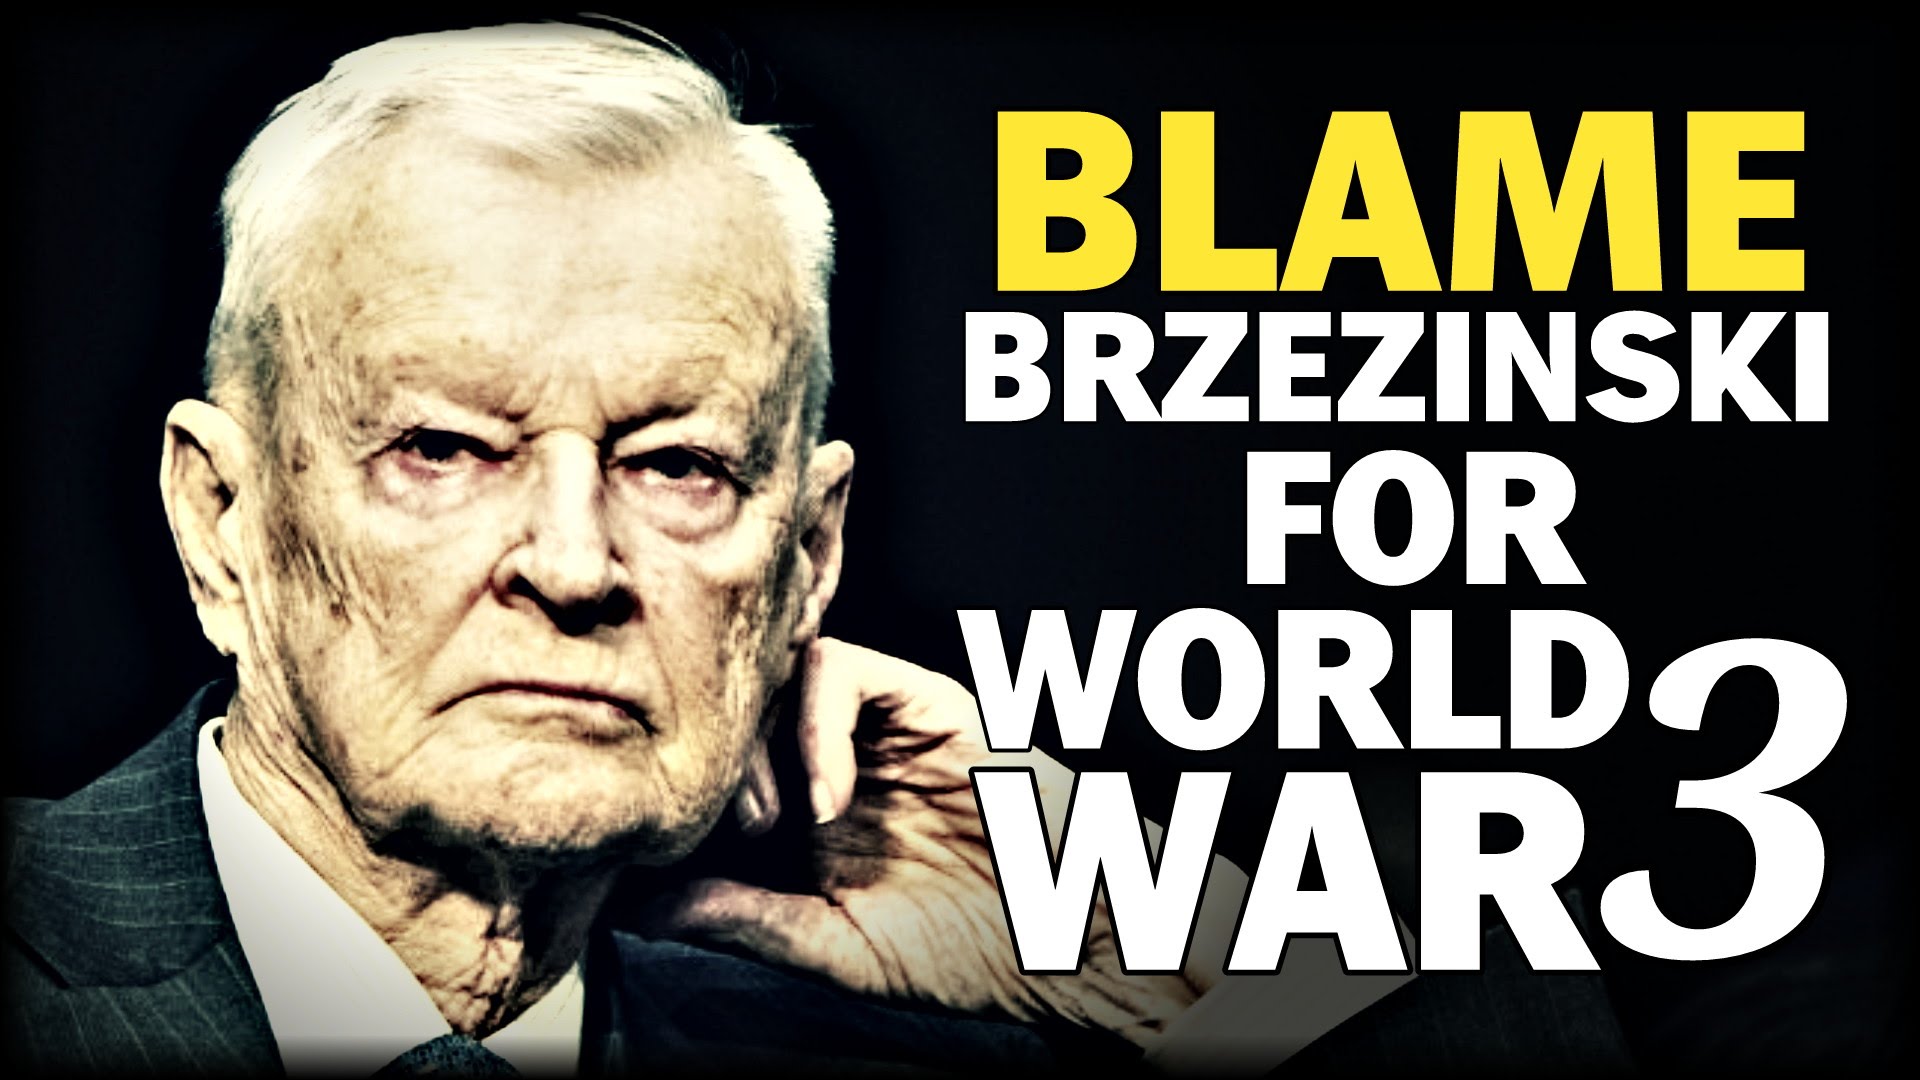 BLAME BRZEZINSKI FOR WORLD WAR 3